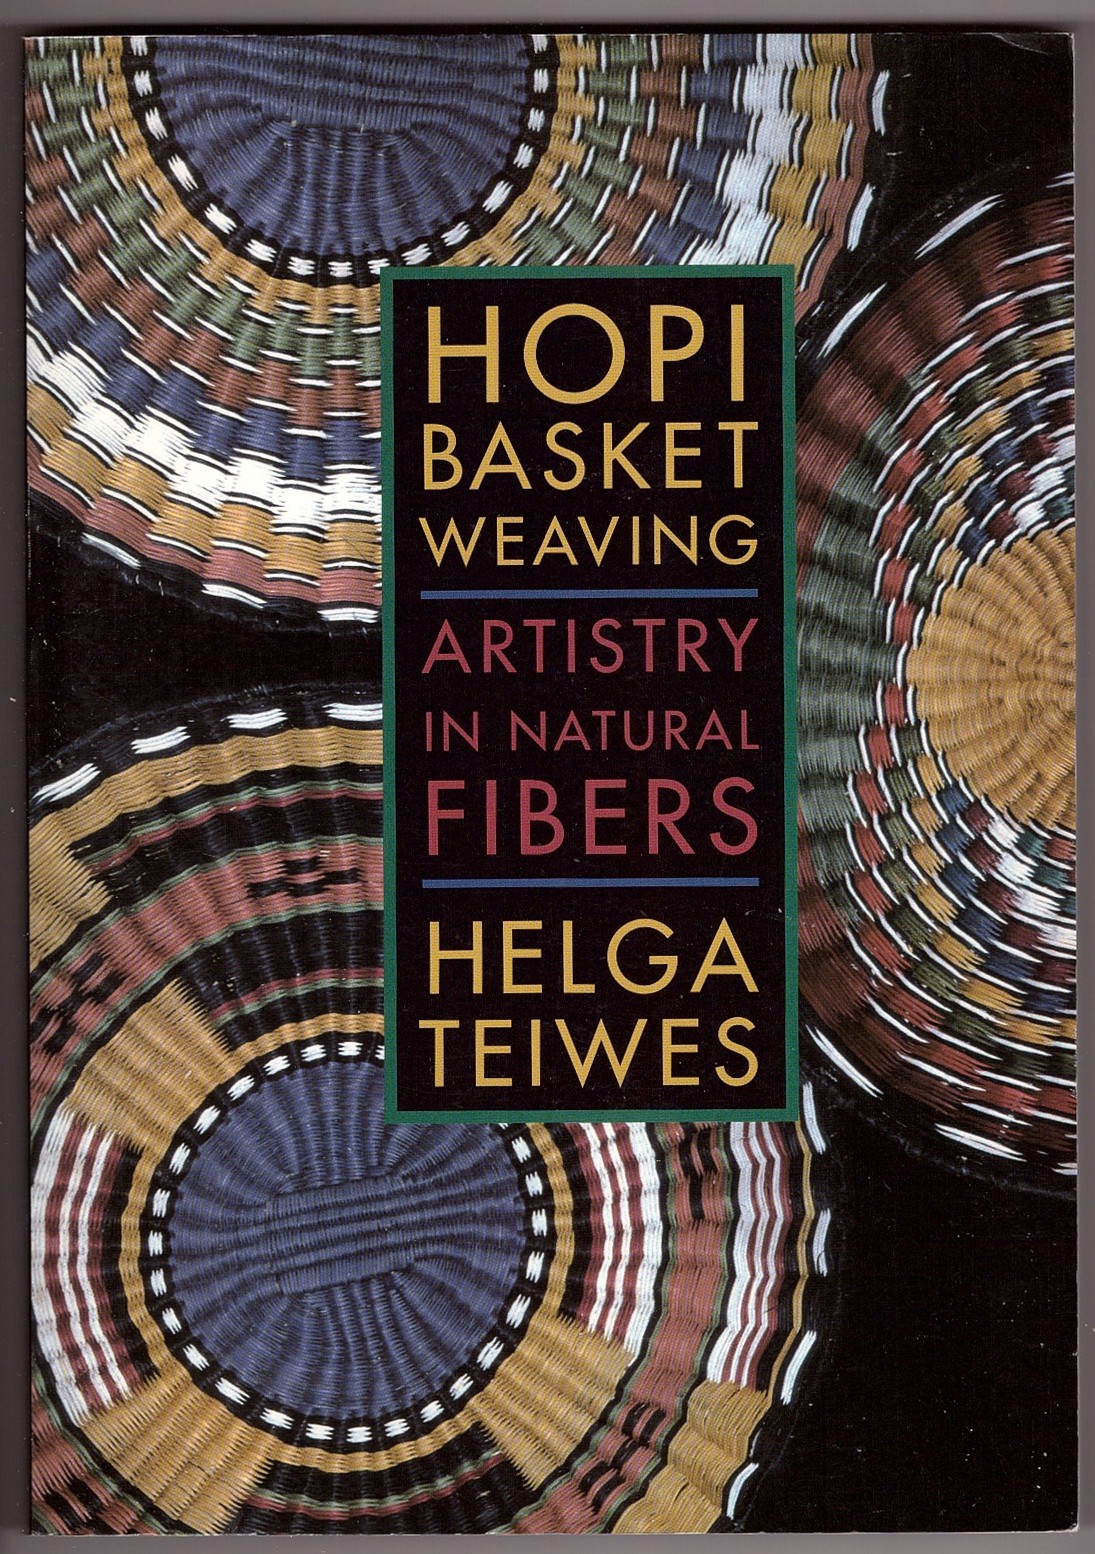 TEIWES, HELGA - Hopi Basket Weaving Artistry in Natural Fibers